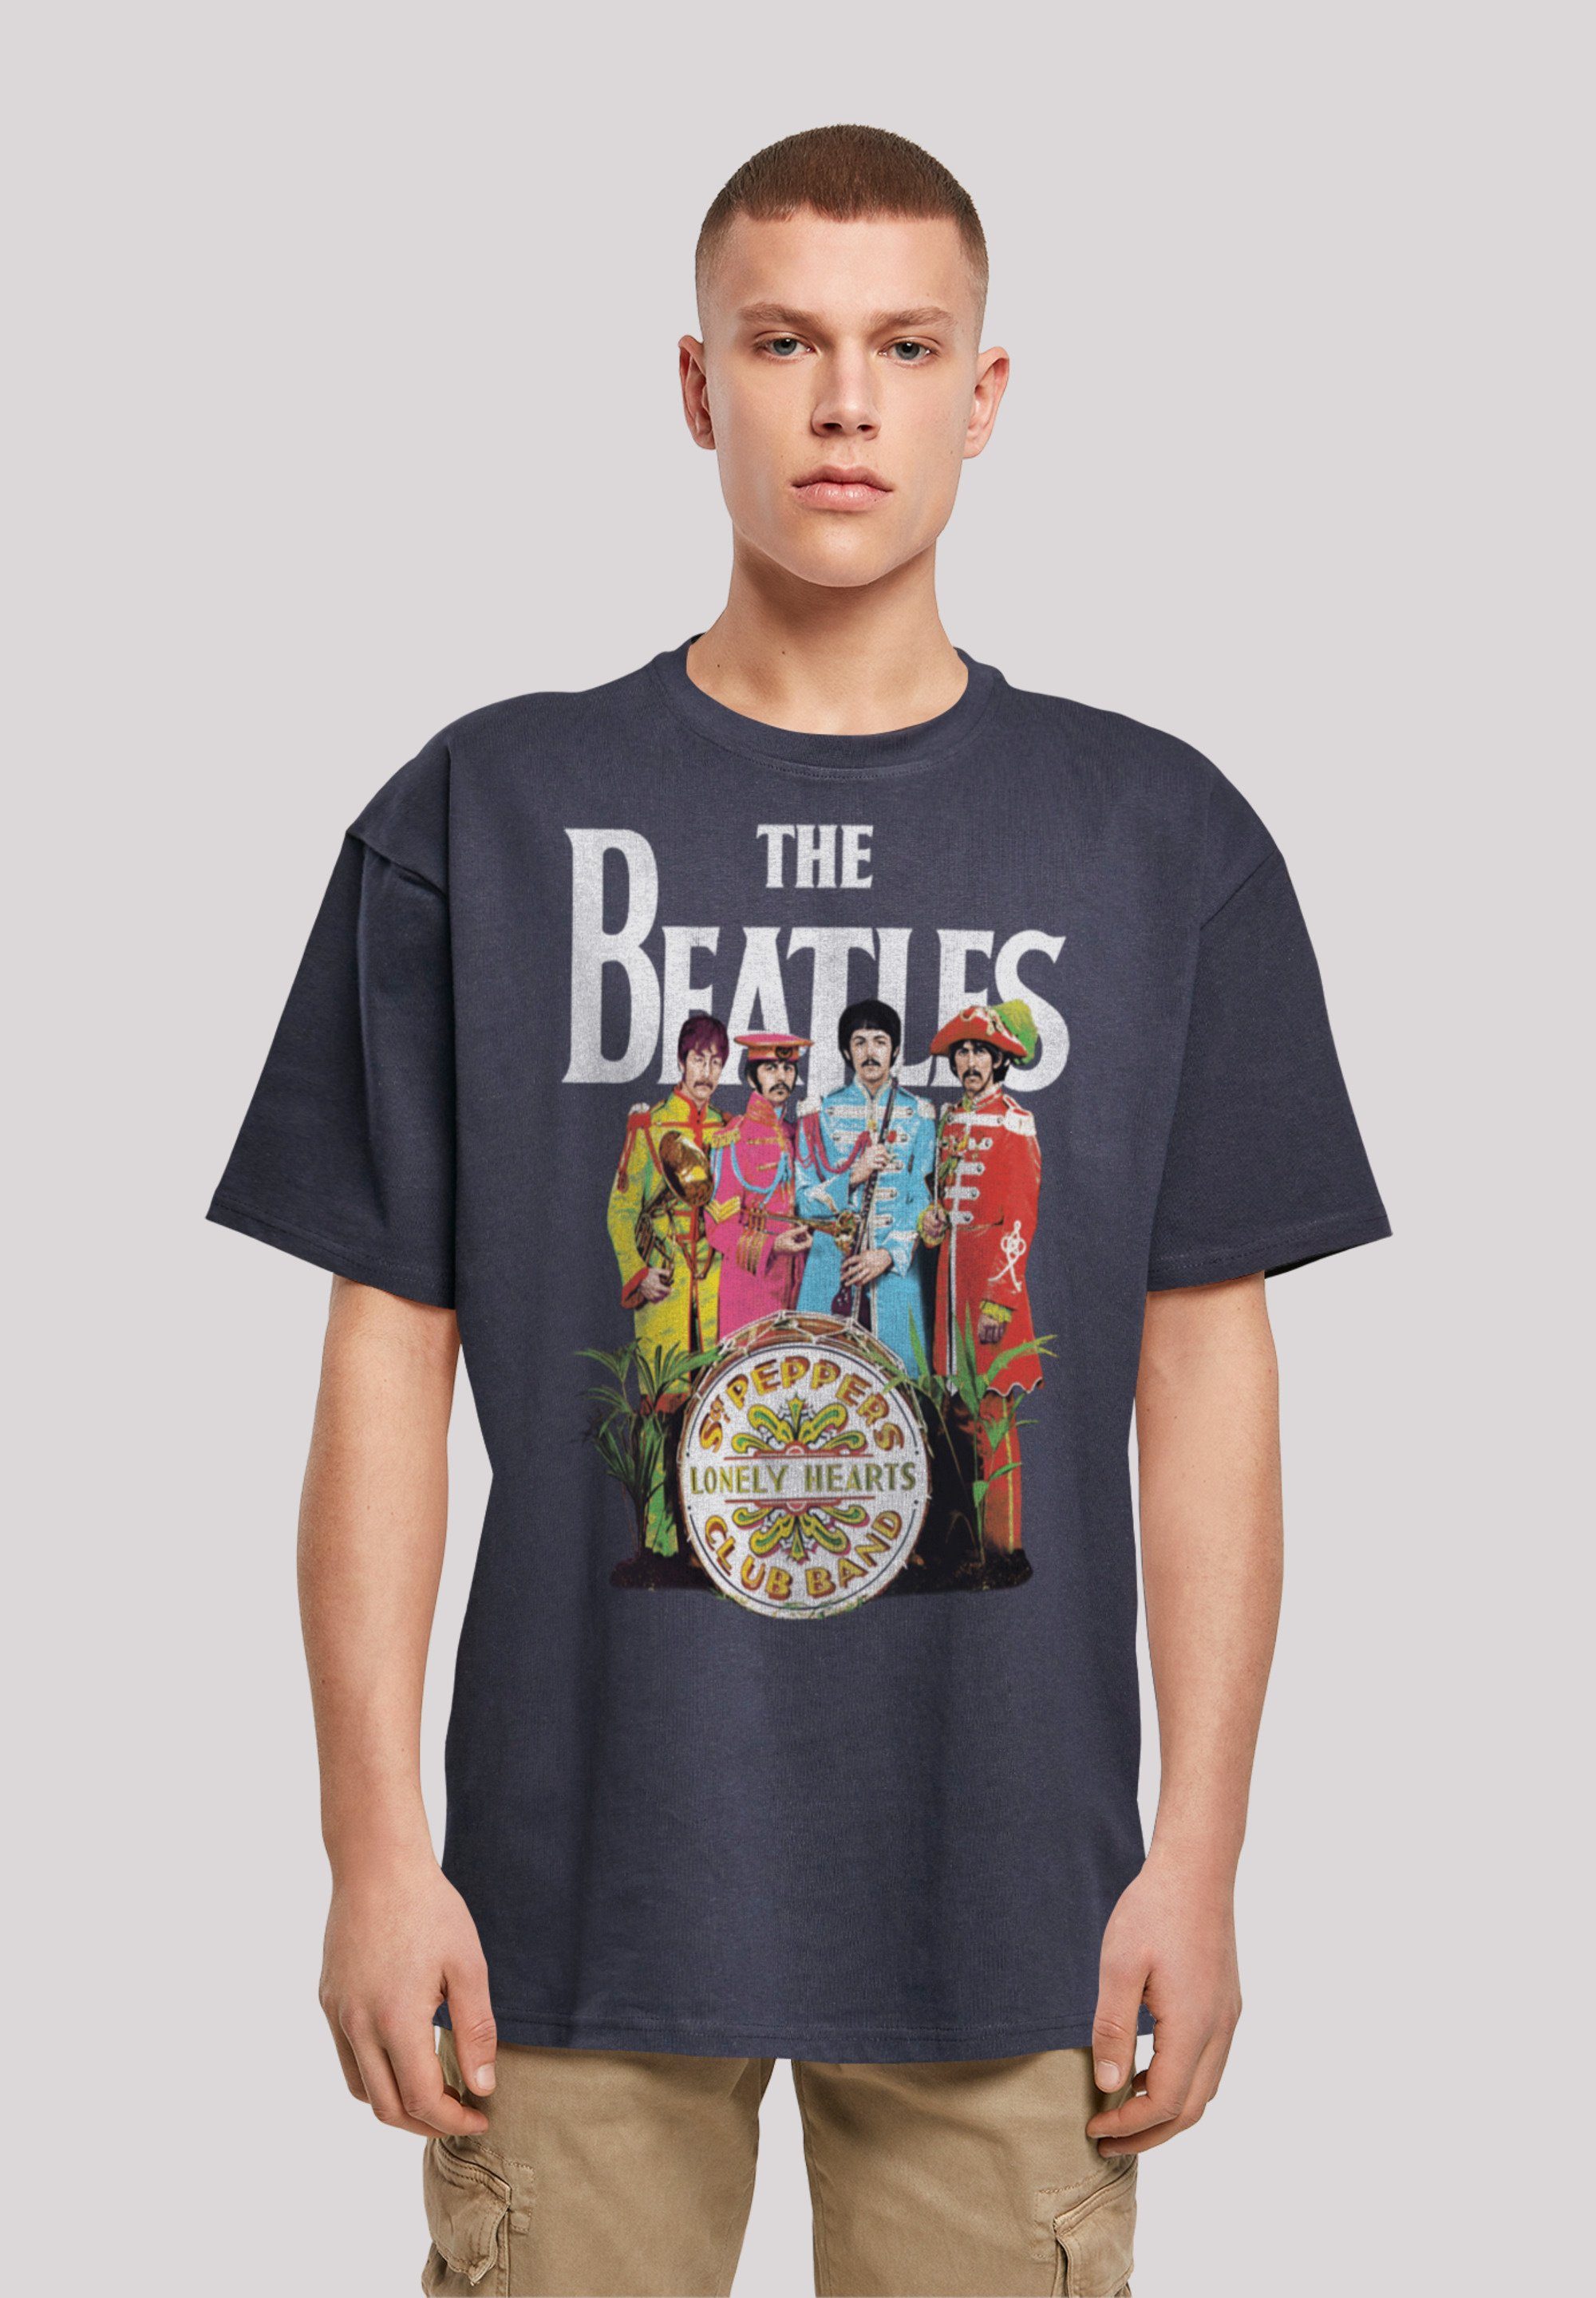 F4NT4STIC T-Shirt The Beatles Band Pepper Print Sgt navy Black